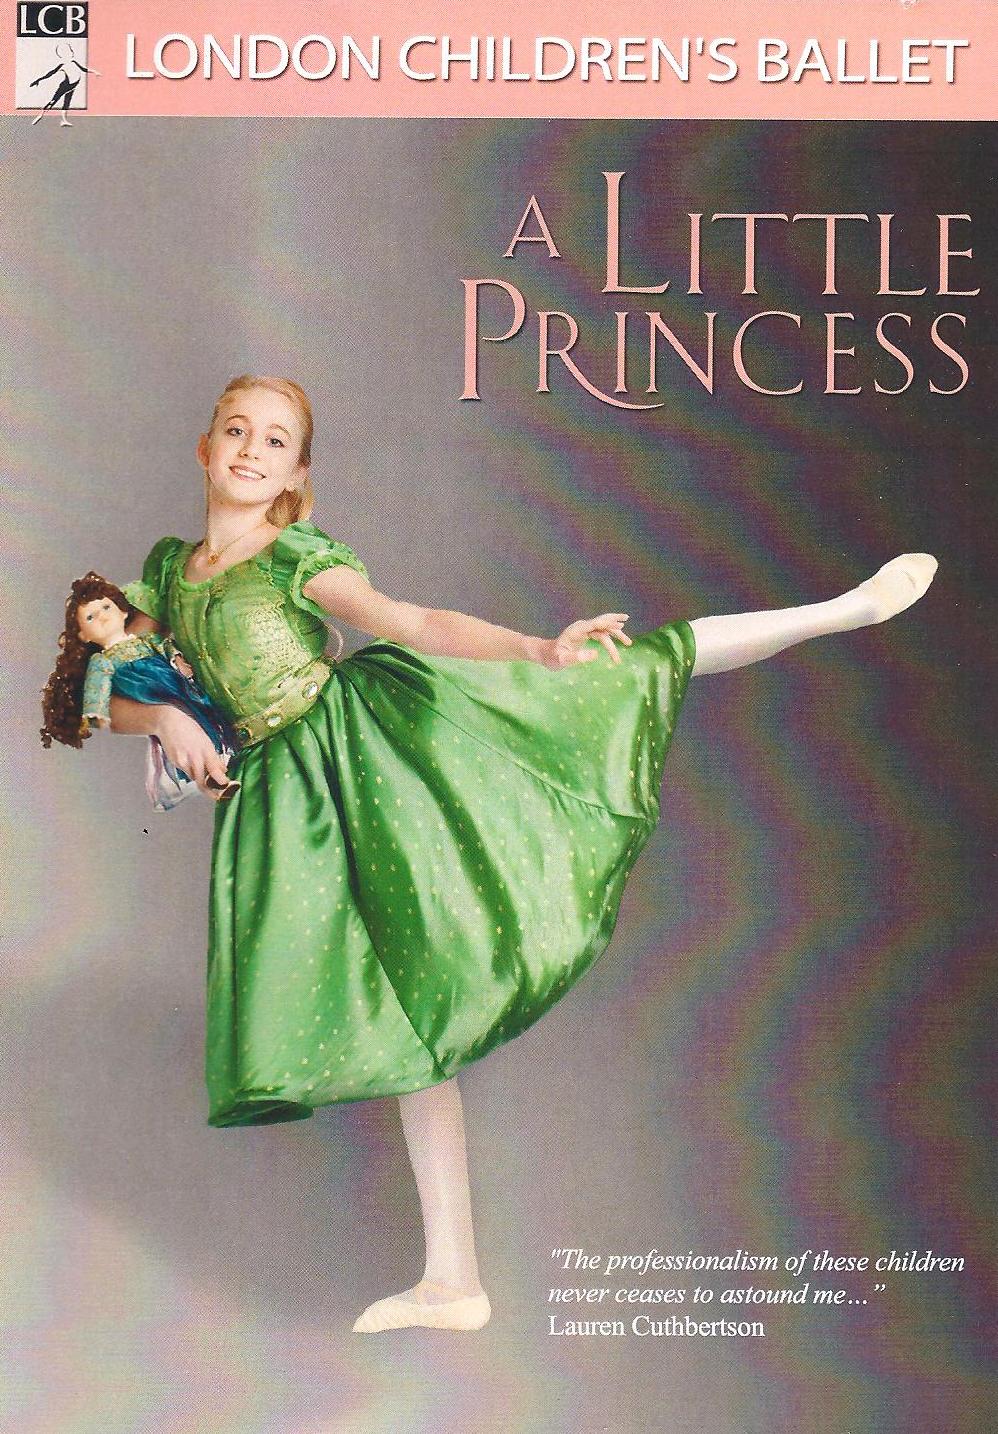 Little Princess (2012)